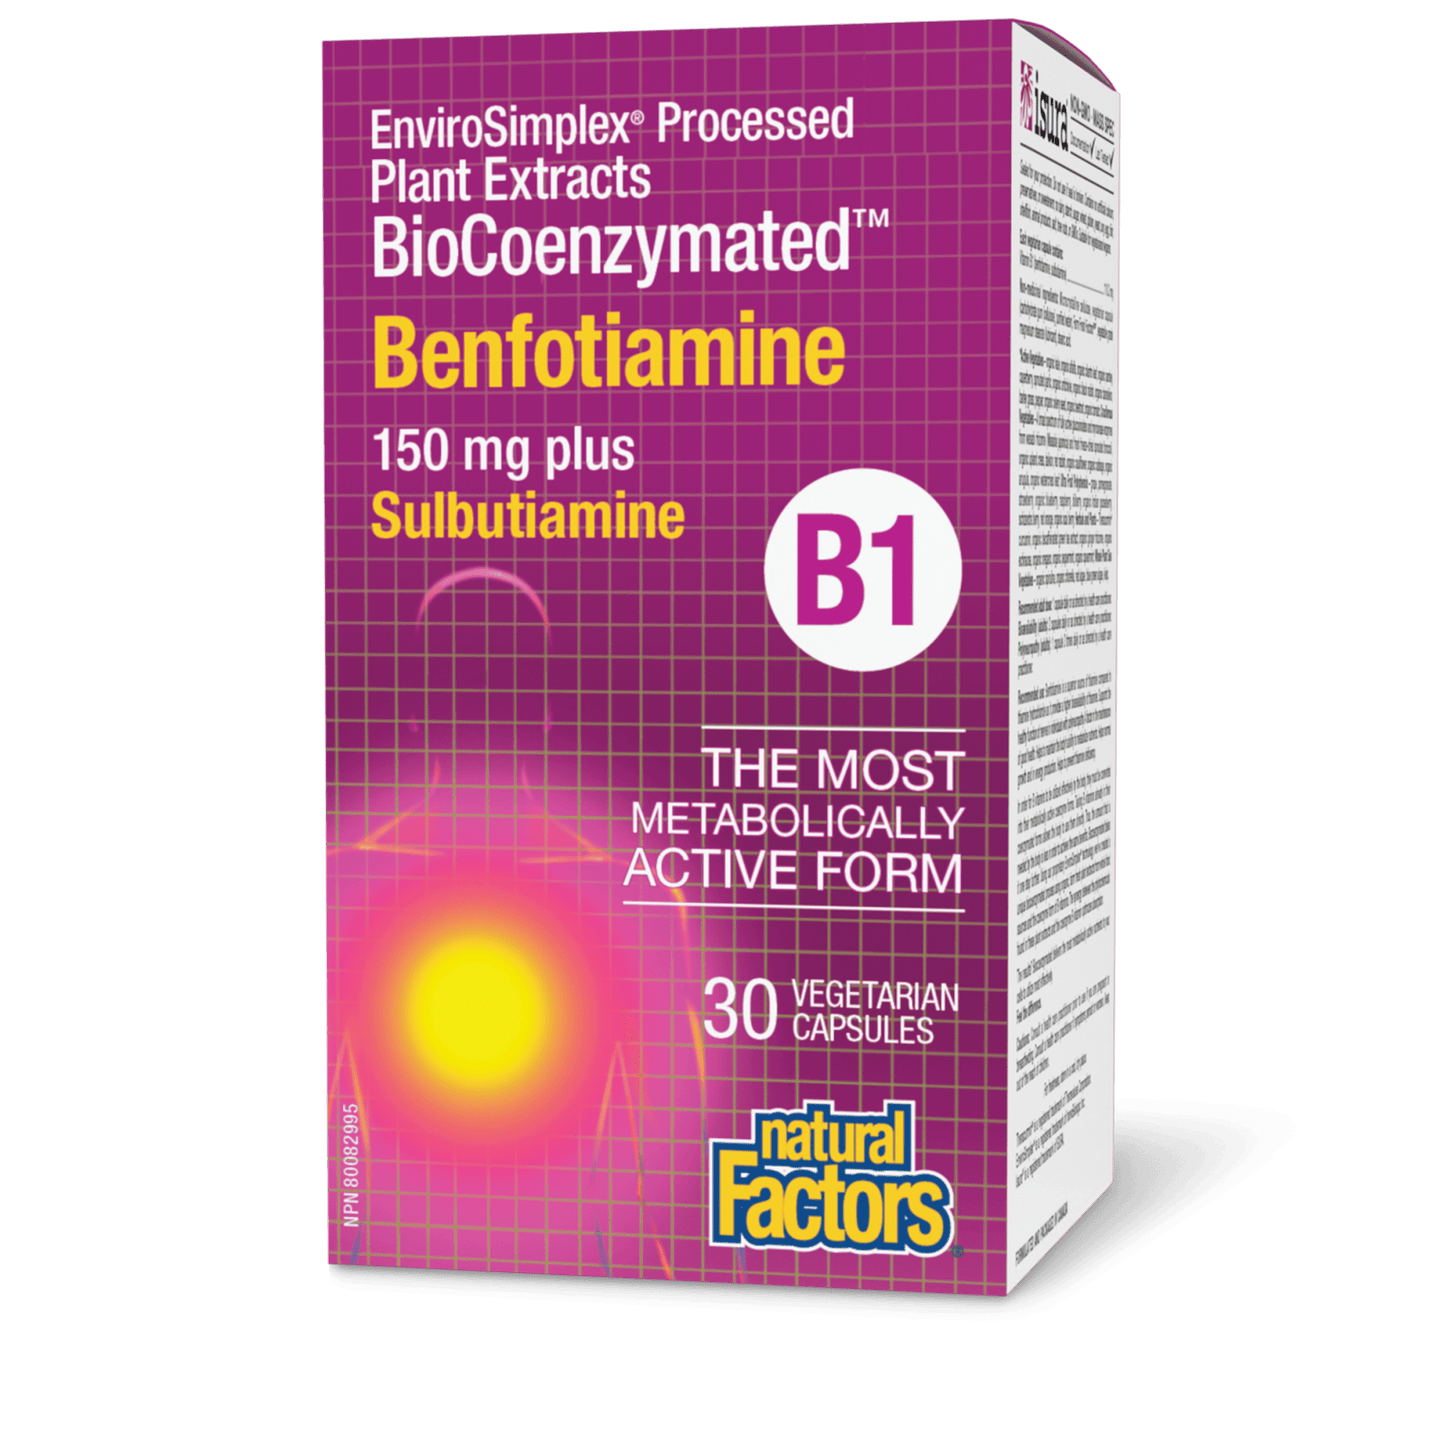 BioCoenzymated Benfotiamine • B1 plus Sulbutiamine, Natural Factors|v|image|1248